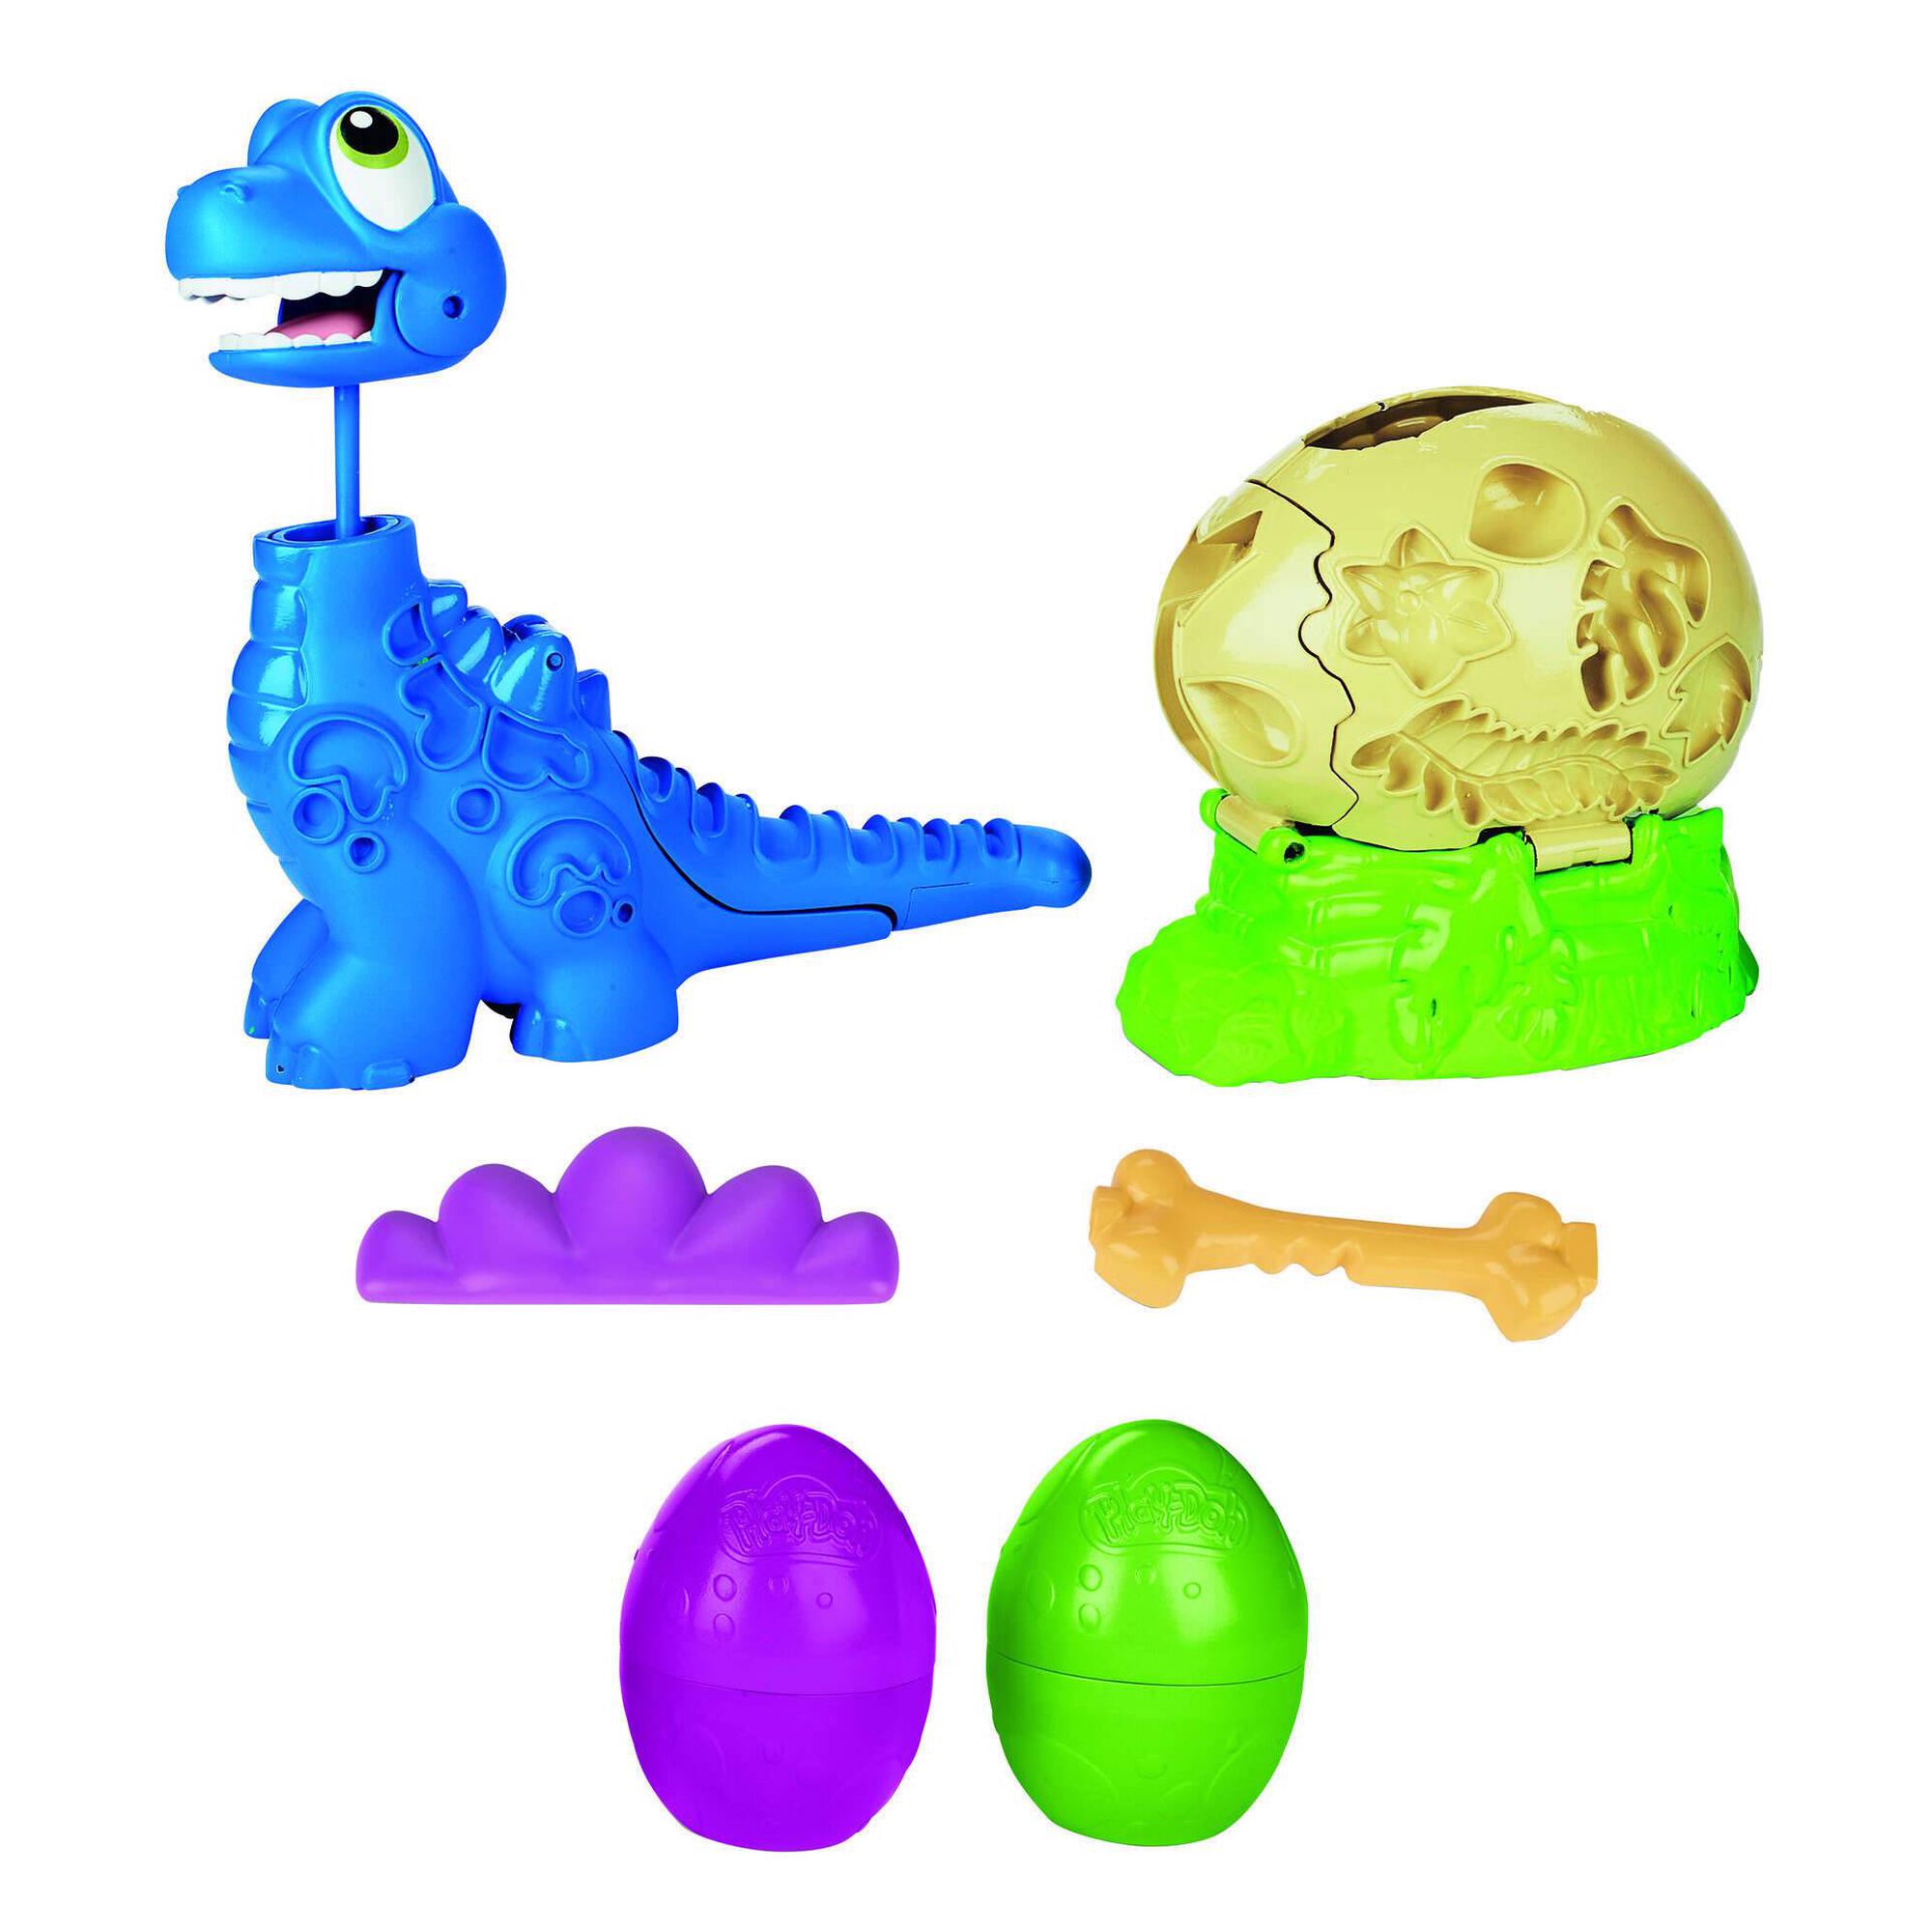 Capacho Desenho - Tiranossauro Rex Toy Story 